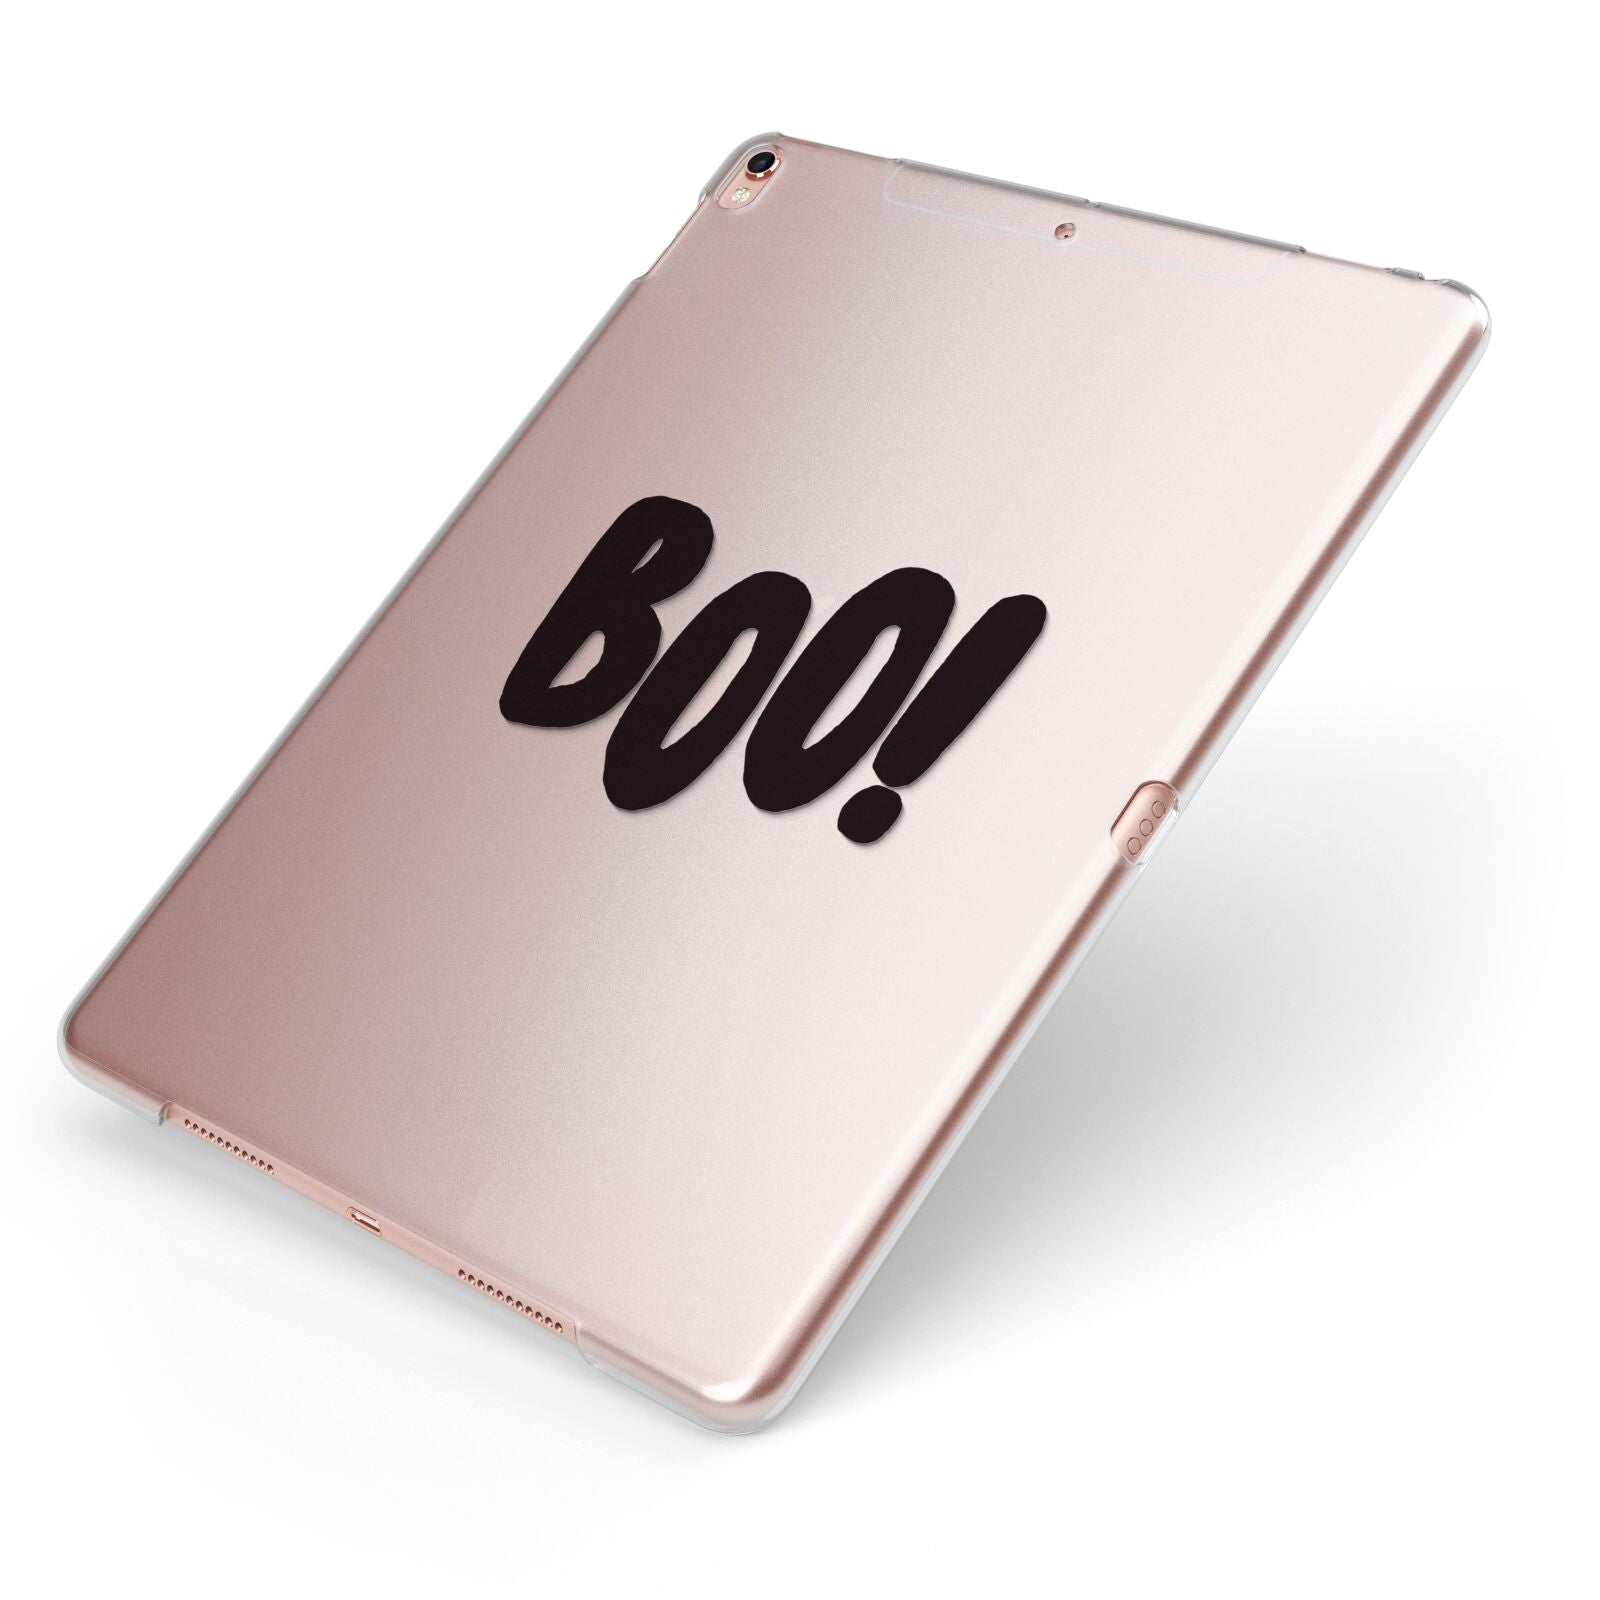 Boo Black Apple iPad Case on Rose Gold iPad Side View